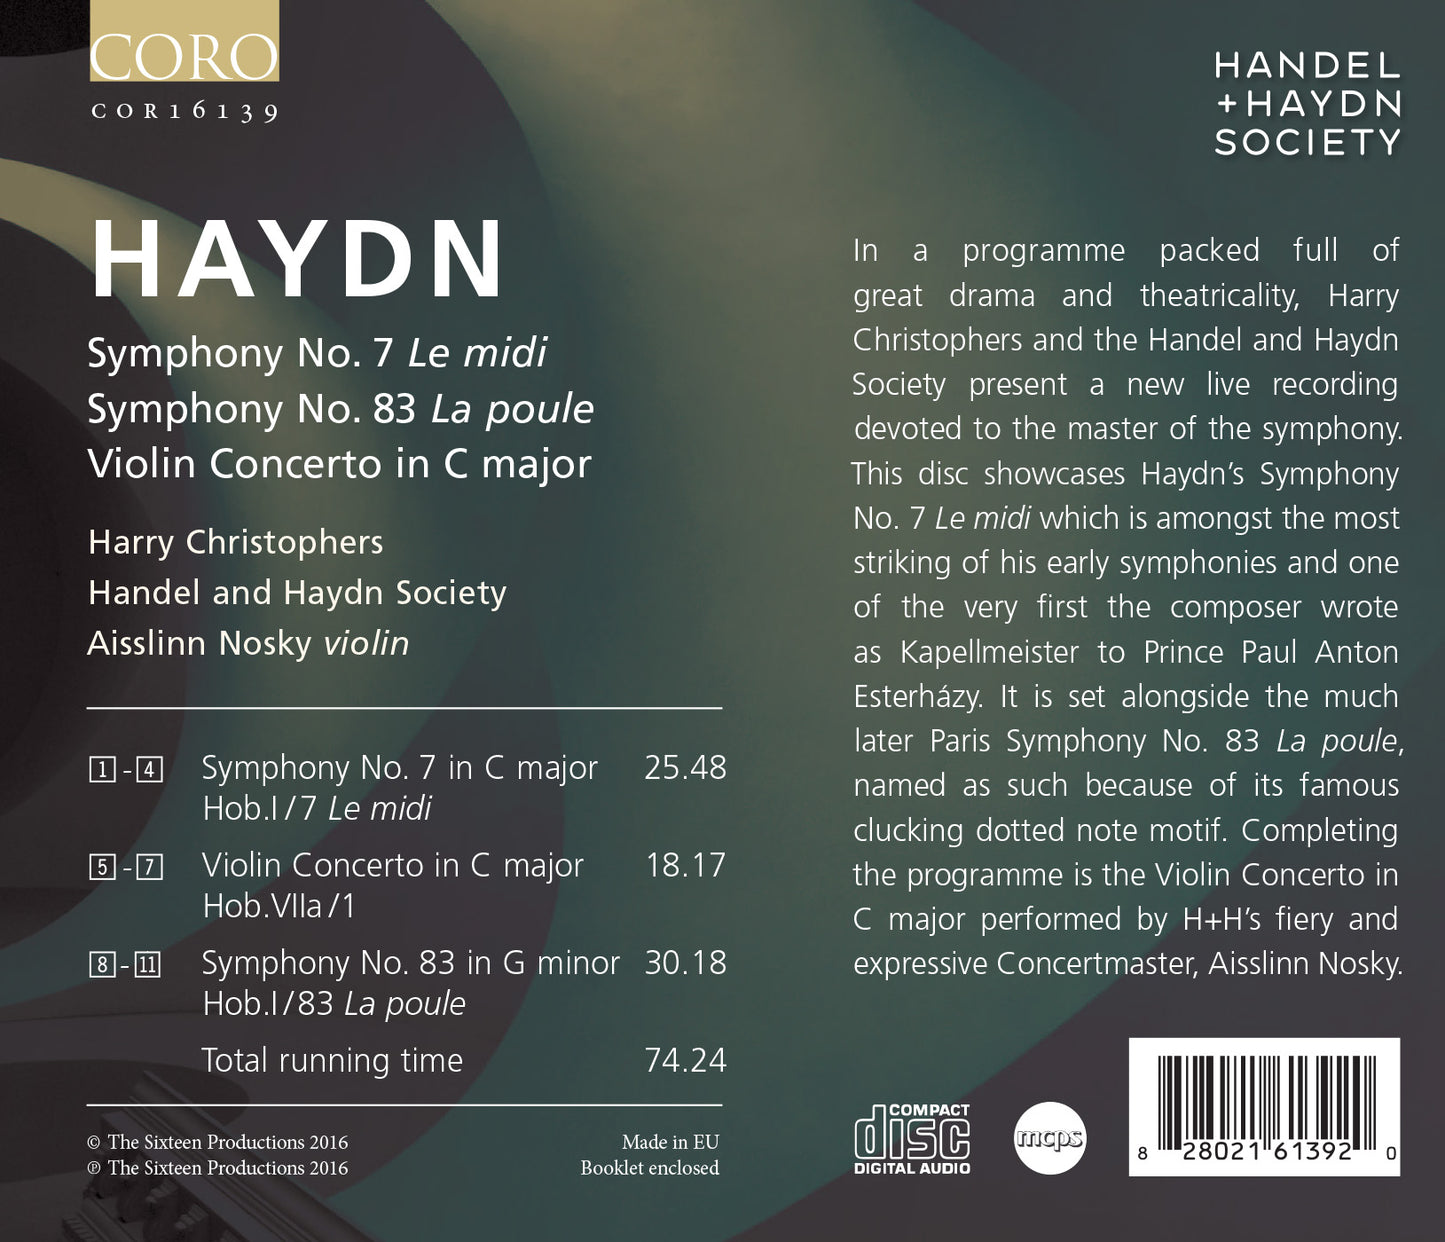 Haydn: Symphonies Nos. 7, "Le Midi" And 83, "La Poule" - Vio